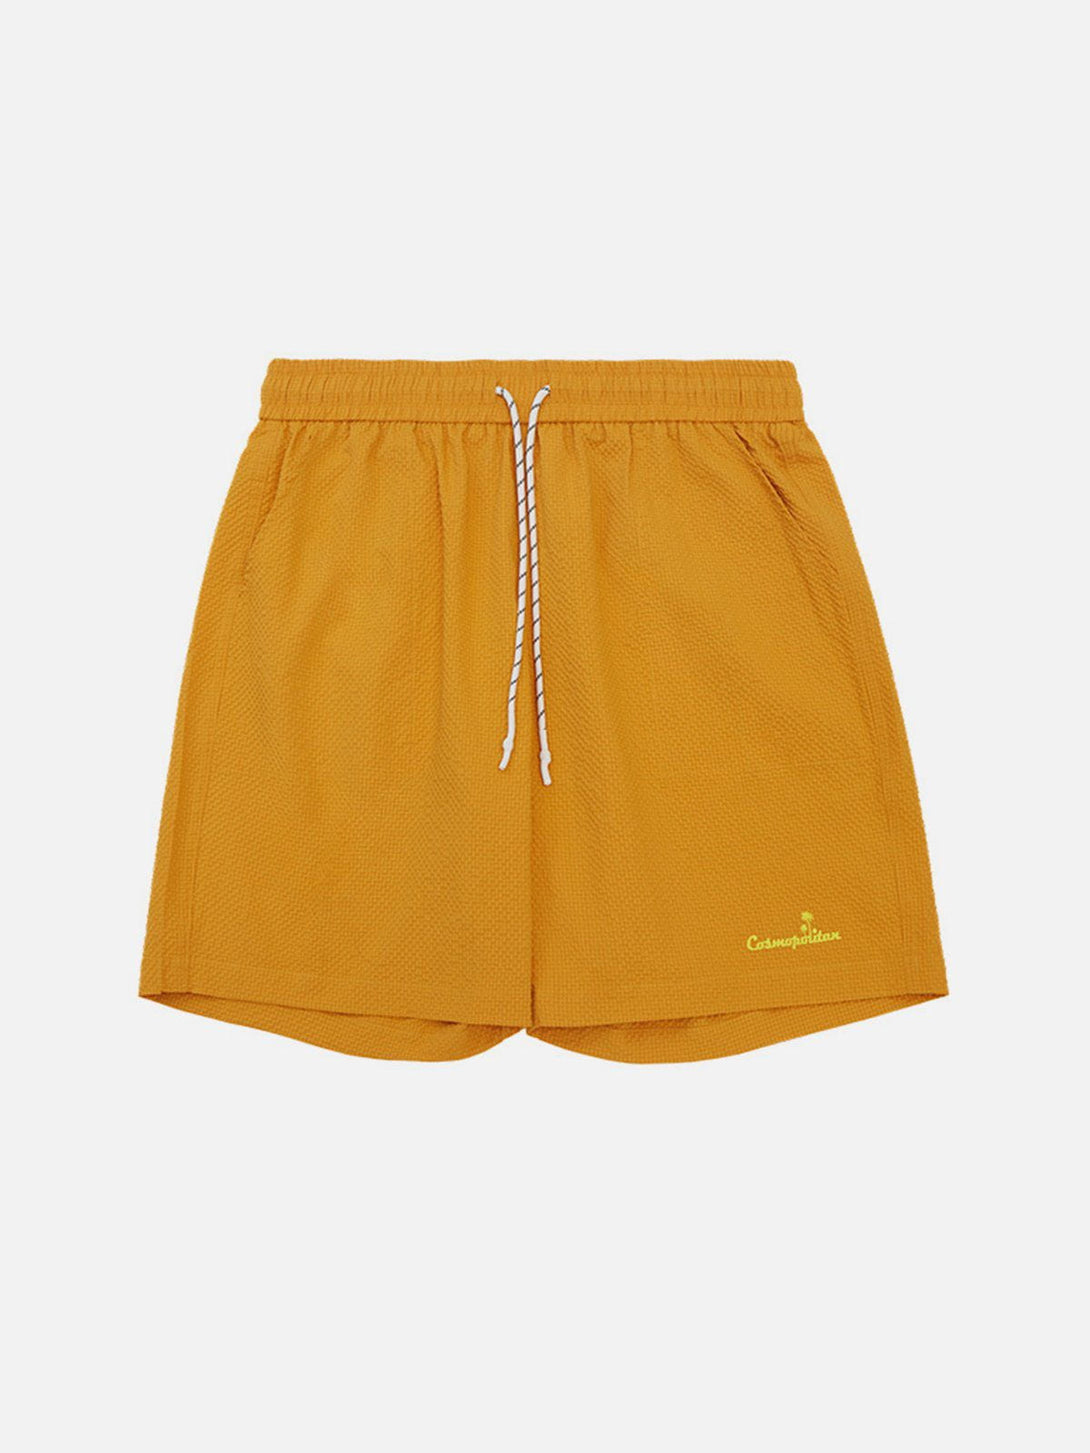 Levefly - Solid Drawstring Shorts - Streetwear Fashion - levefly.com